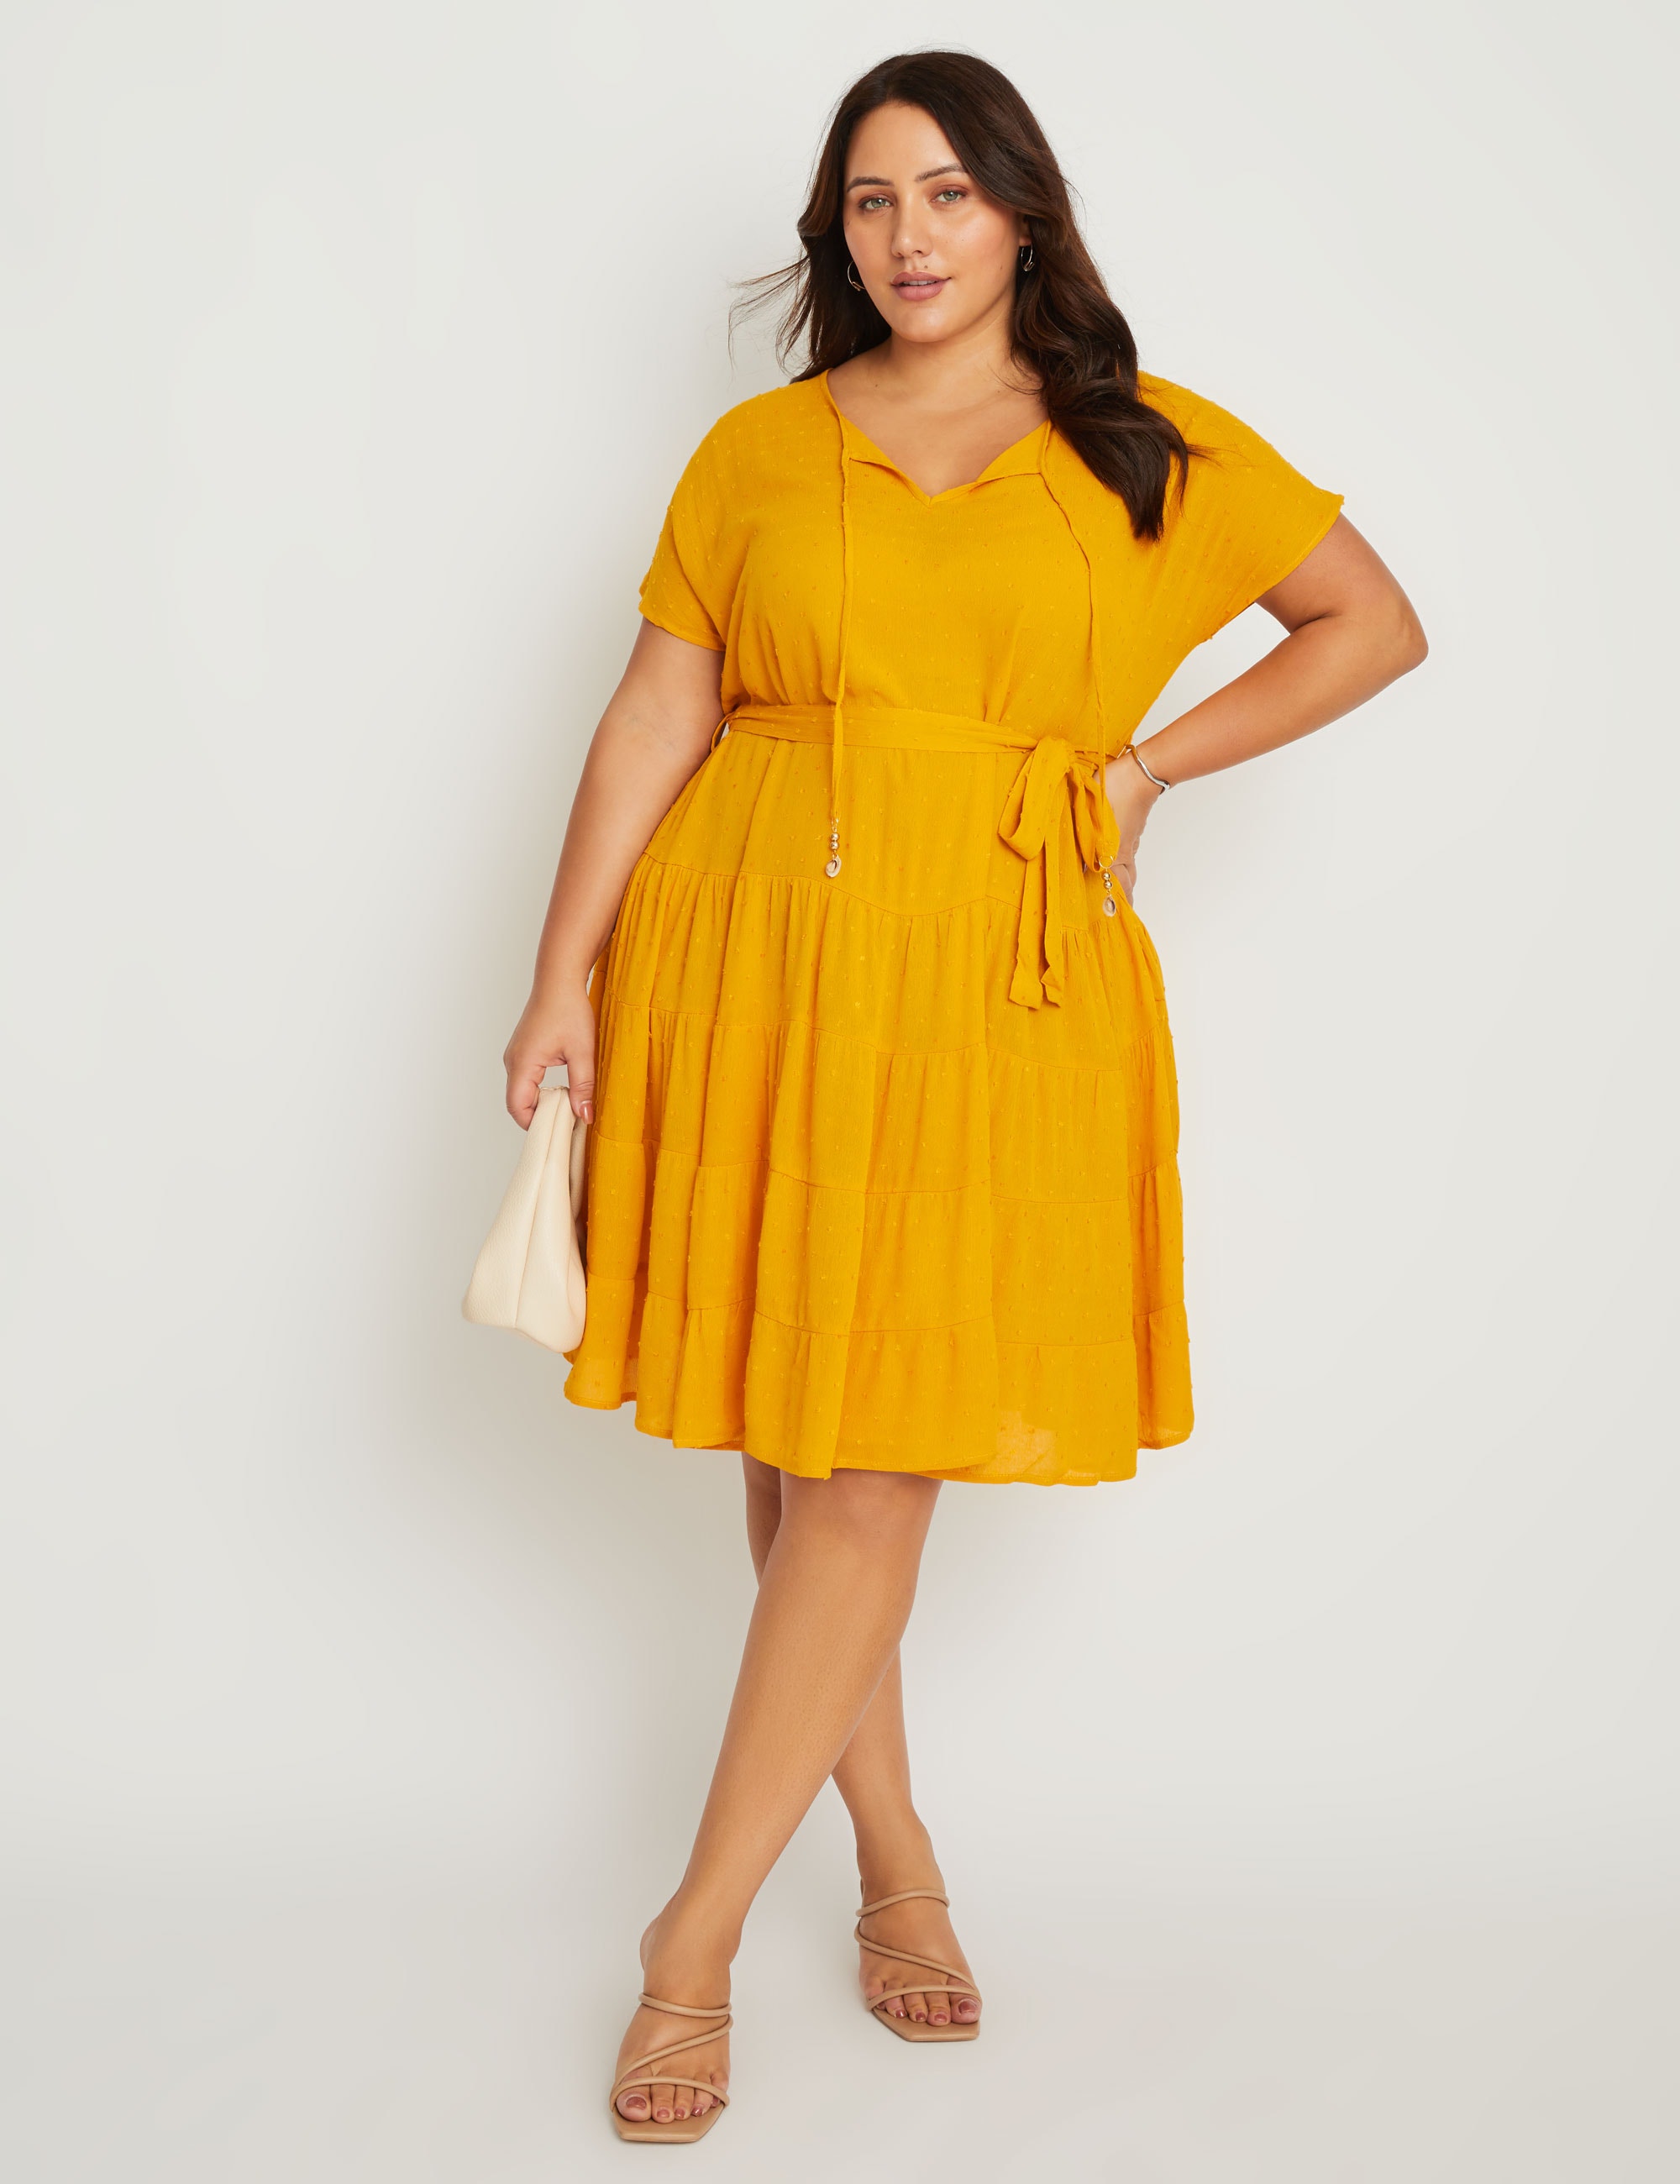  Women's Casual Dresses - Yellows / Women's Casual